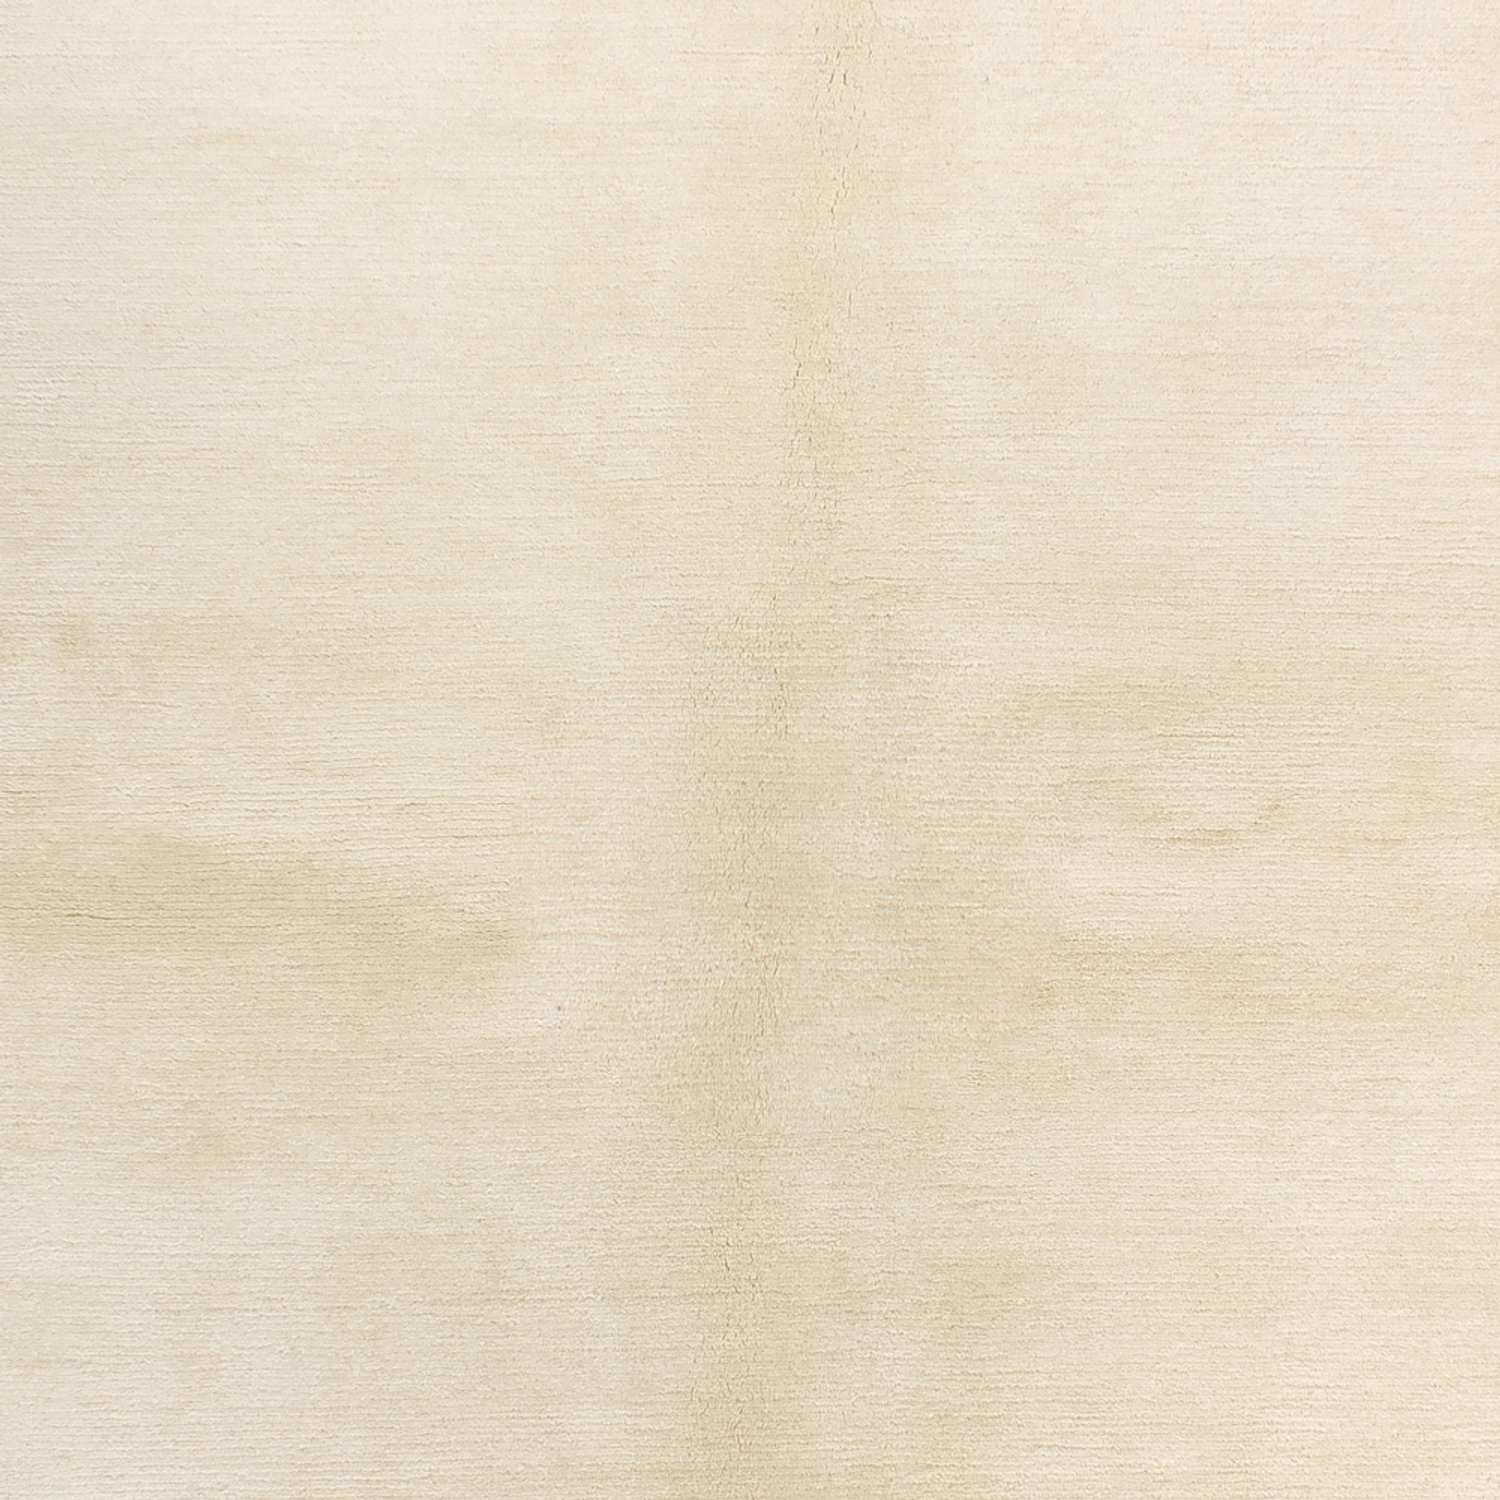 Nepal Rug - Royal - 245 x 174 cm - beige